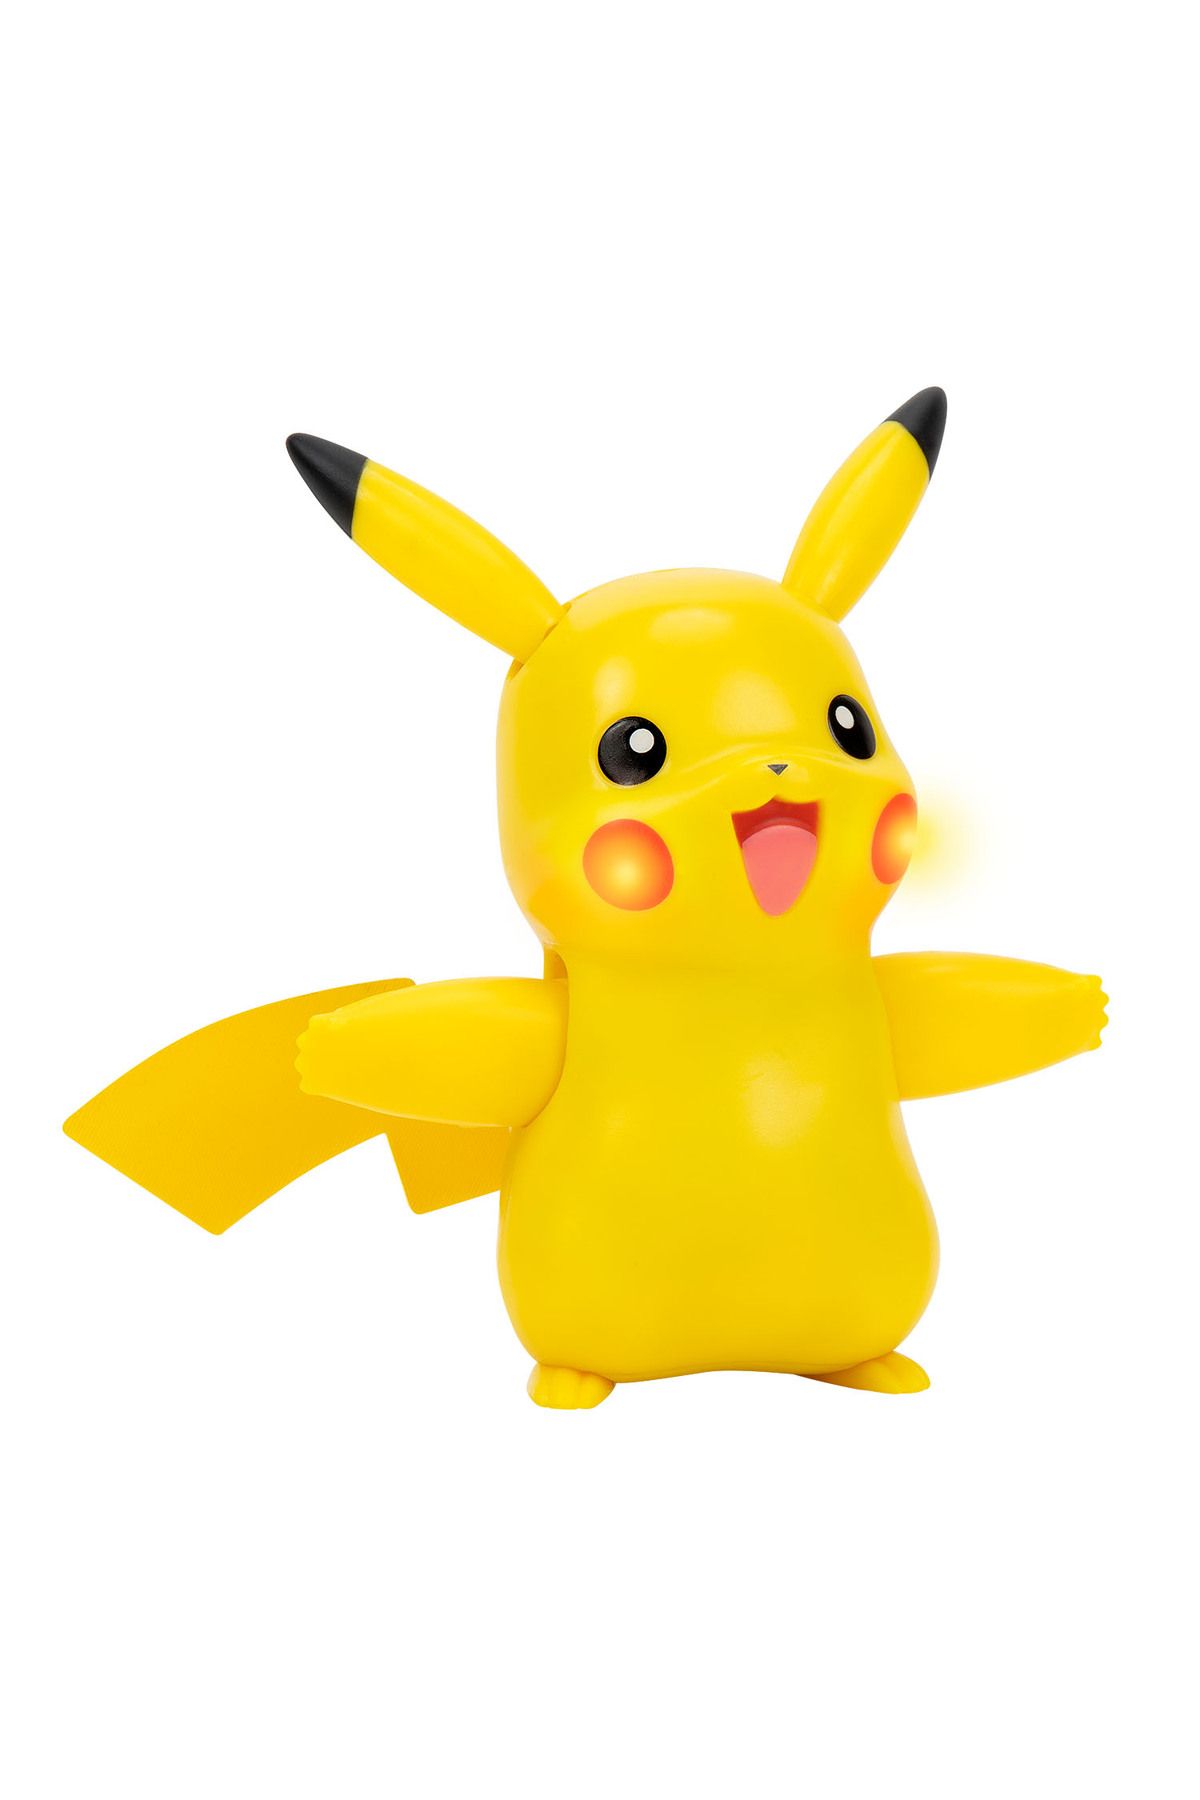 Autentico Pokemon Action Figure Pikachu portachiavi minecraft portachiavi  Squirtle Psyduck portachiavi zaino pendente modello portachiavi auto